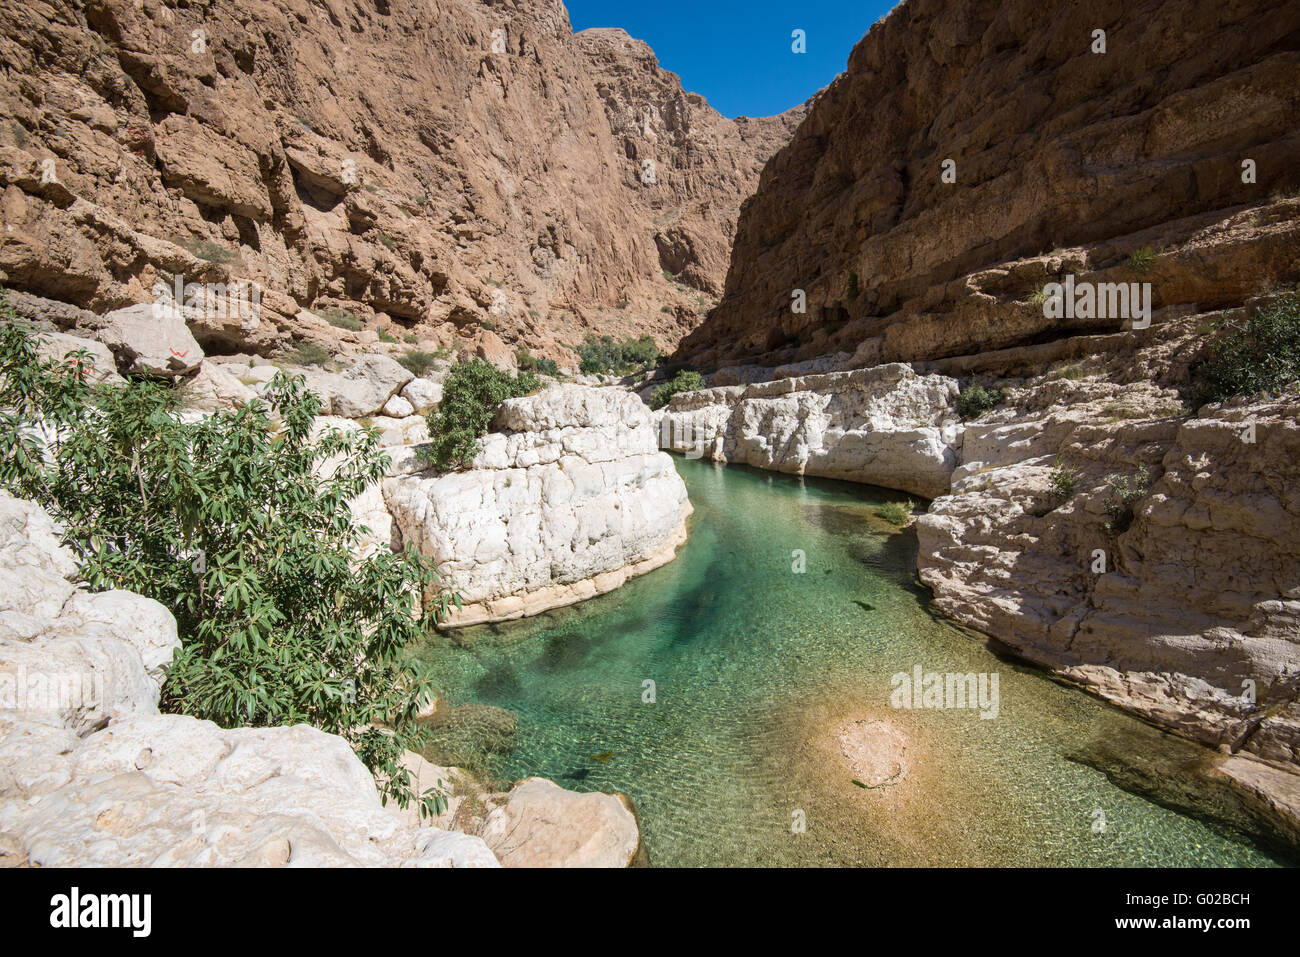 View of Wadi Shab, Oman. Stock Photo